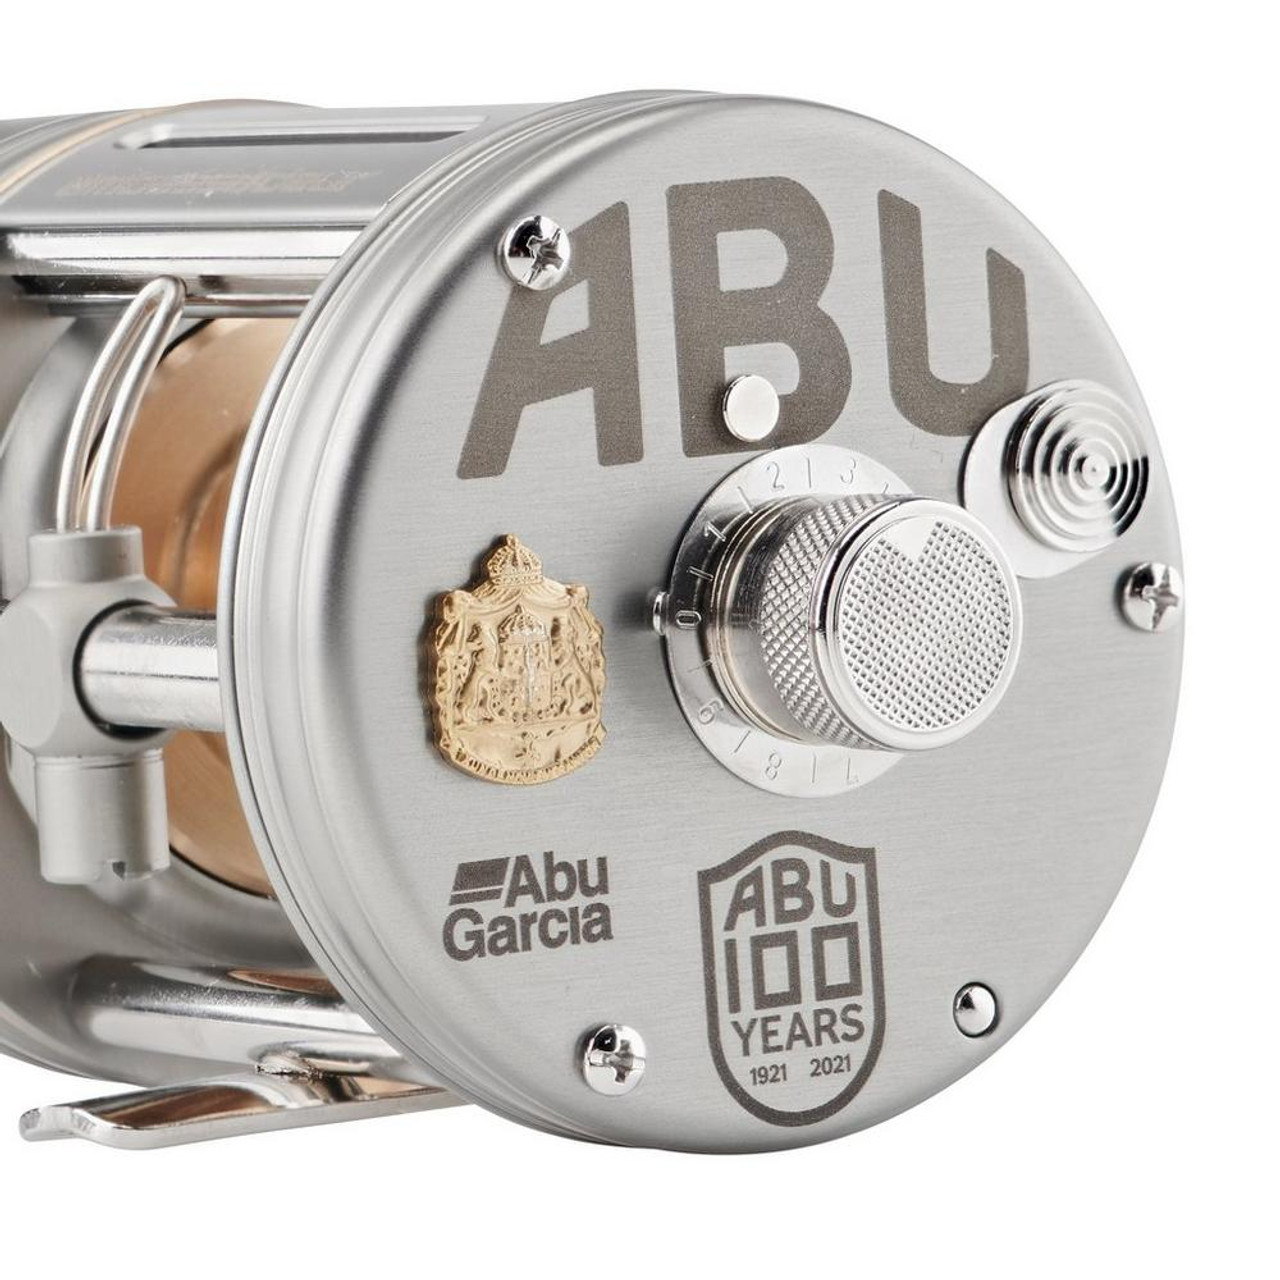 Abu Garcia designer branded watch - Rare promotional watch - Fishing watch